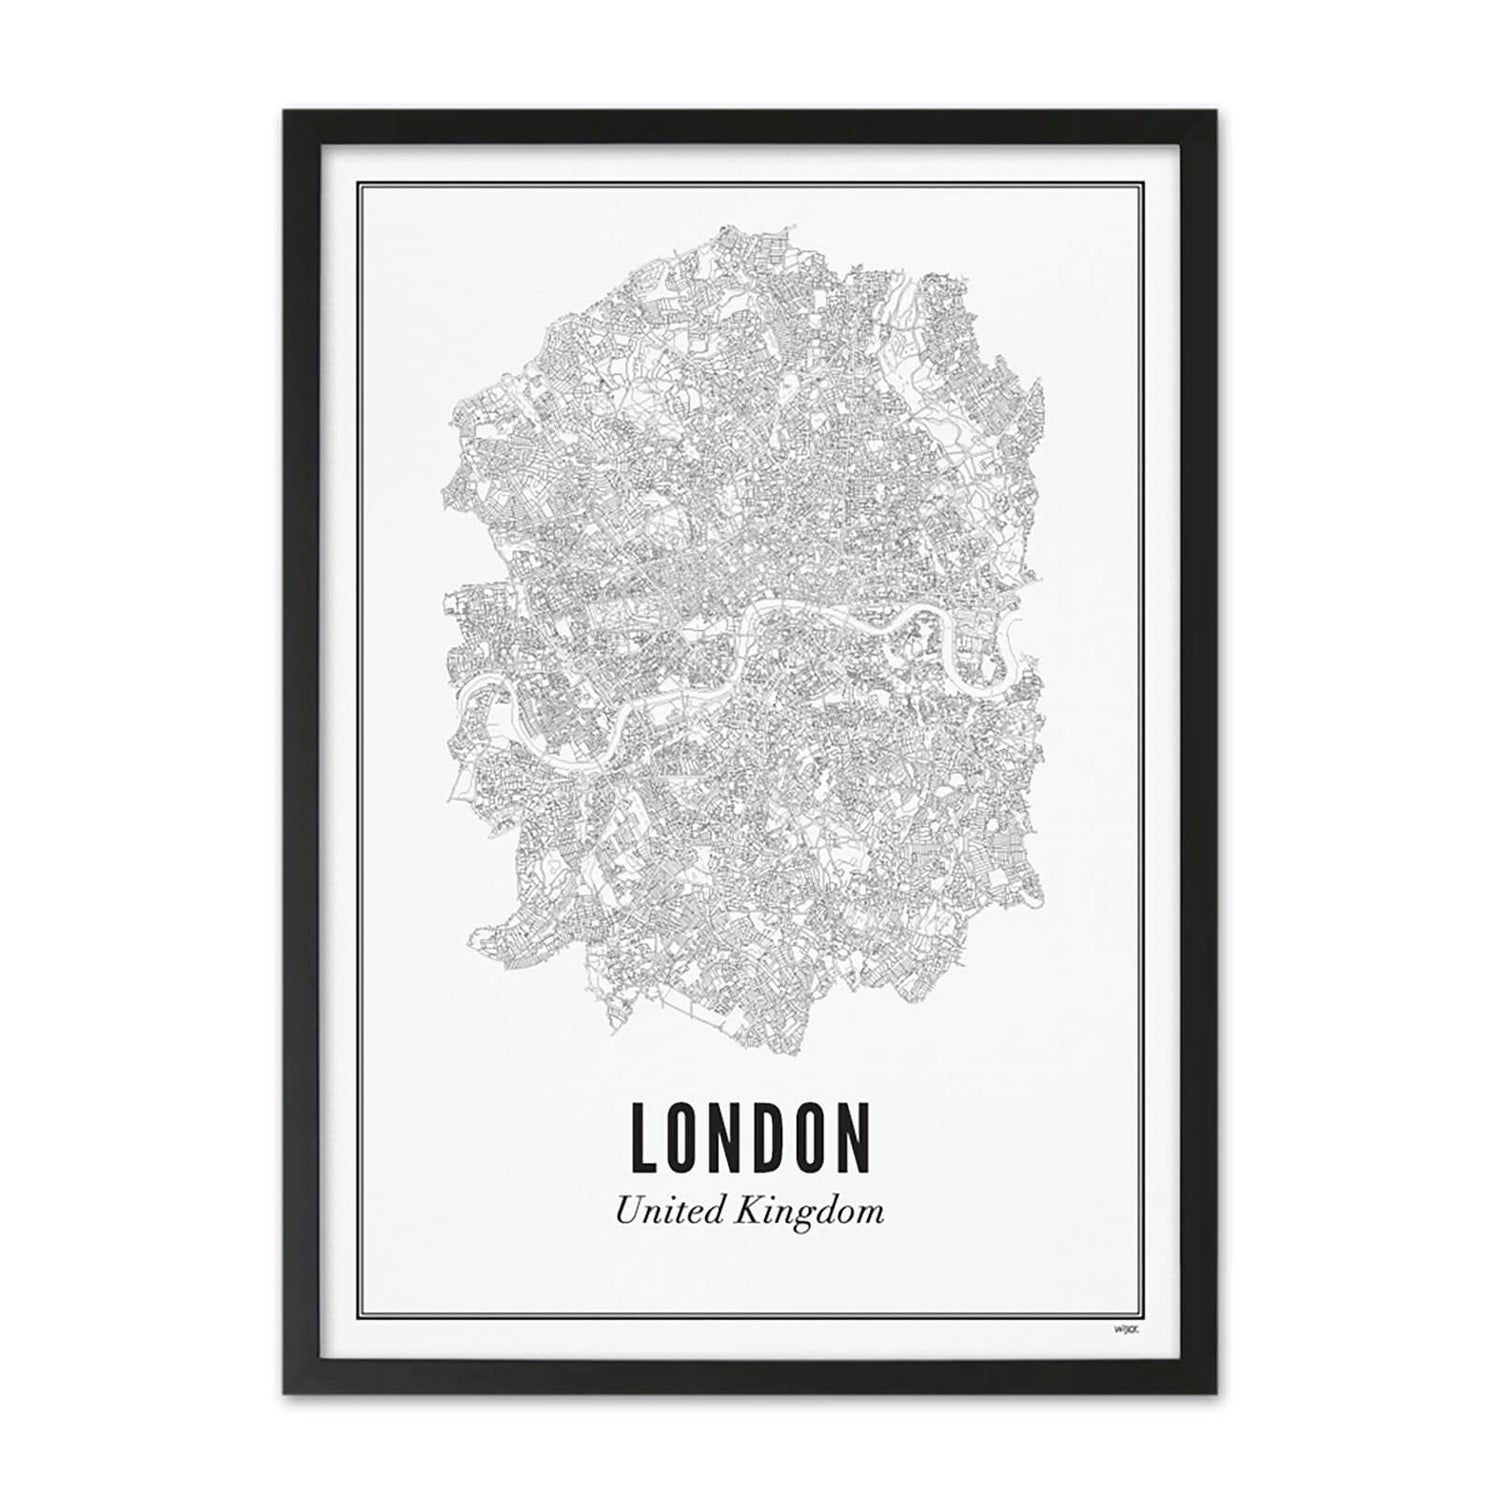 WIJCK Print - London - 21 x 30cm